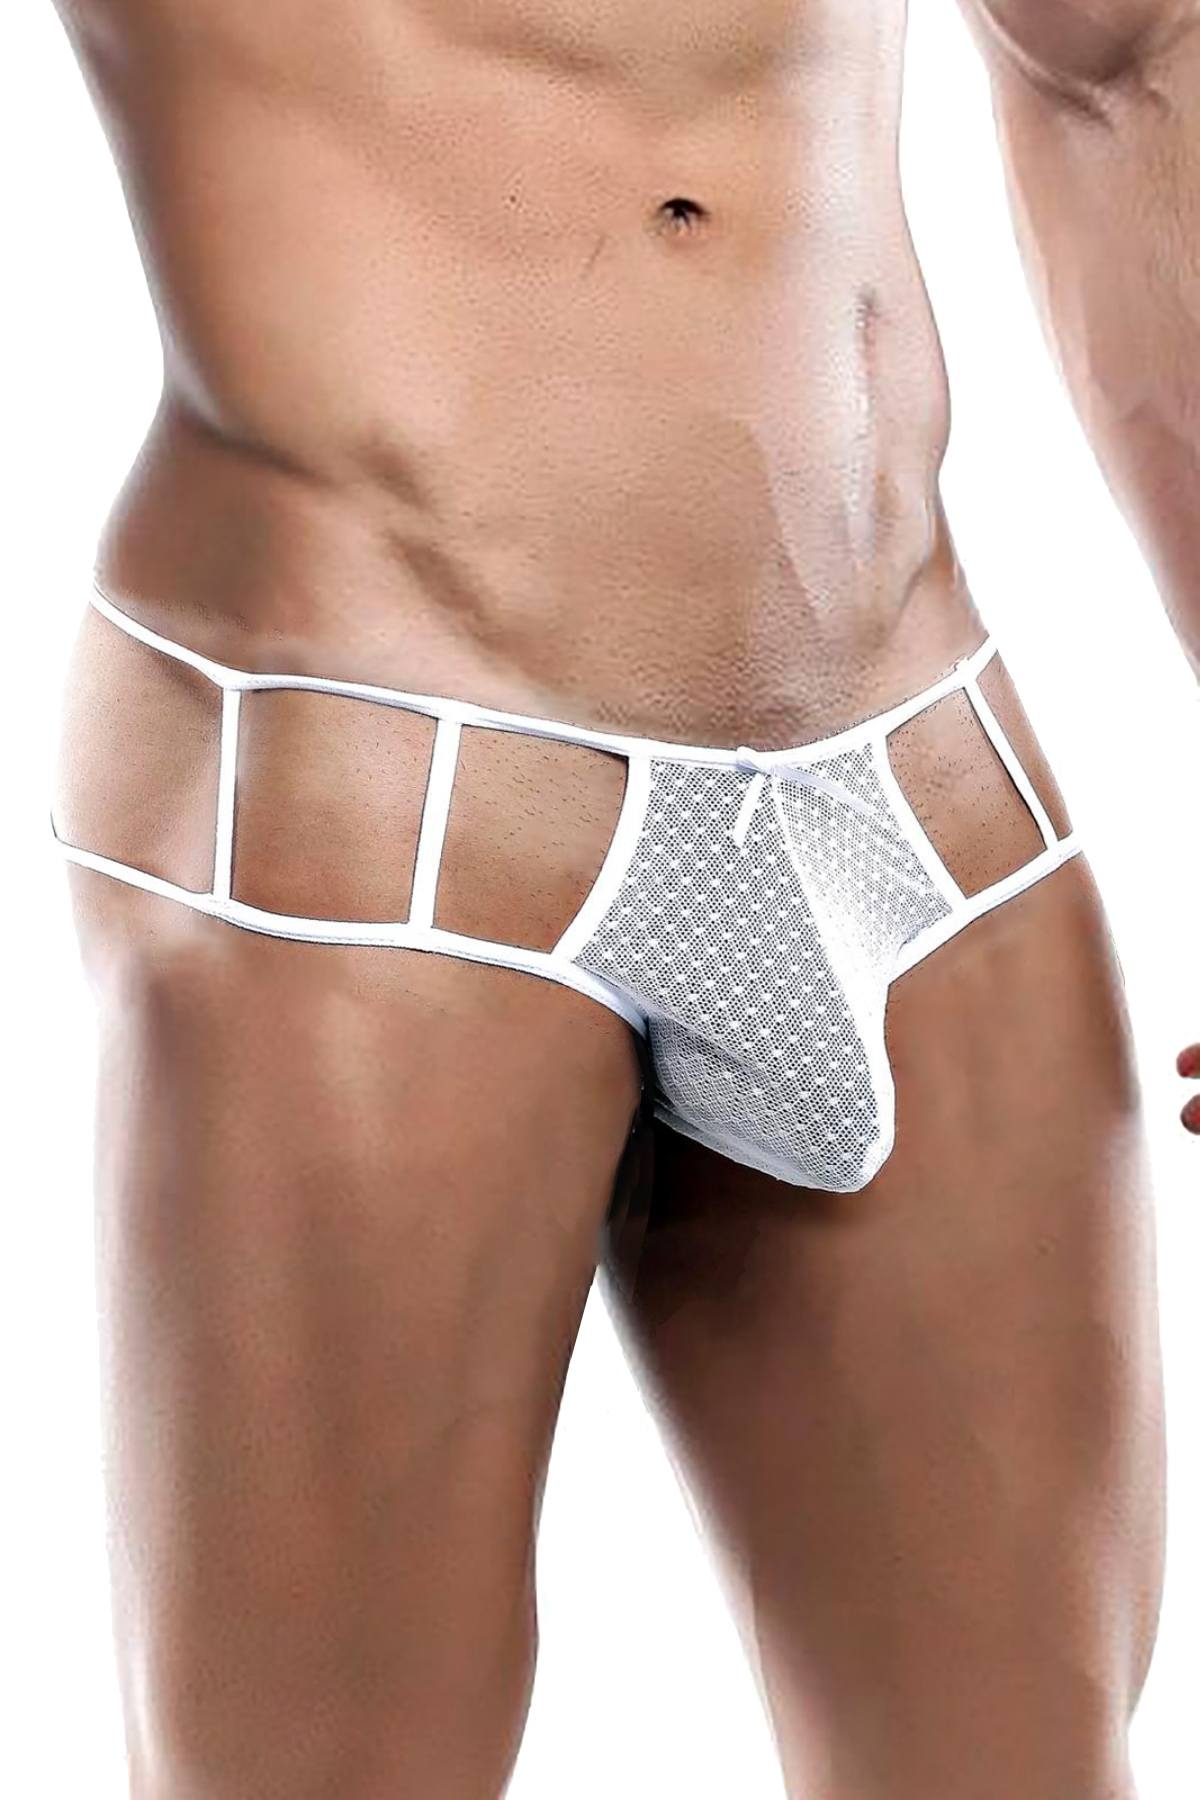 Secret Male White Textured Mesh Open-Grid Sides Bikini Brief